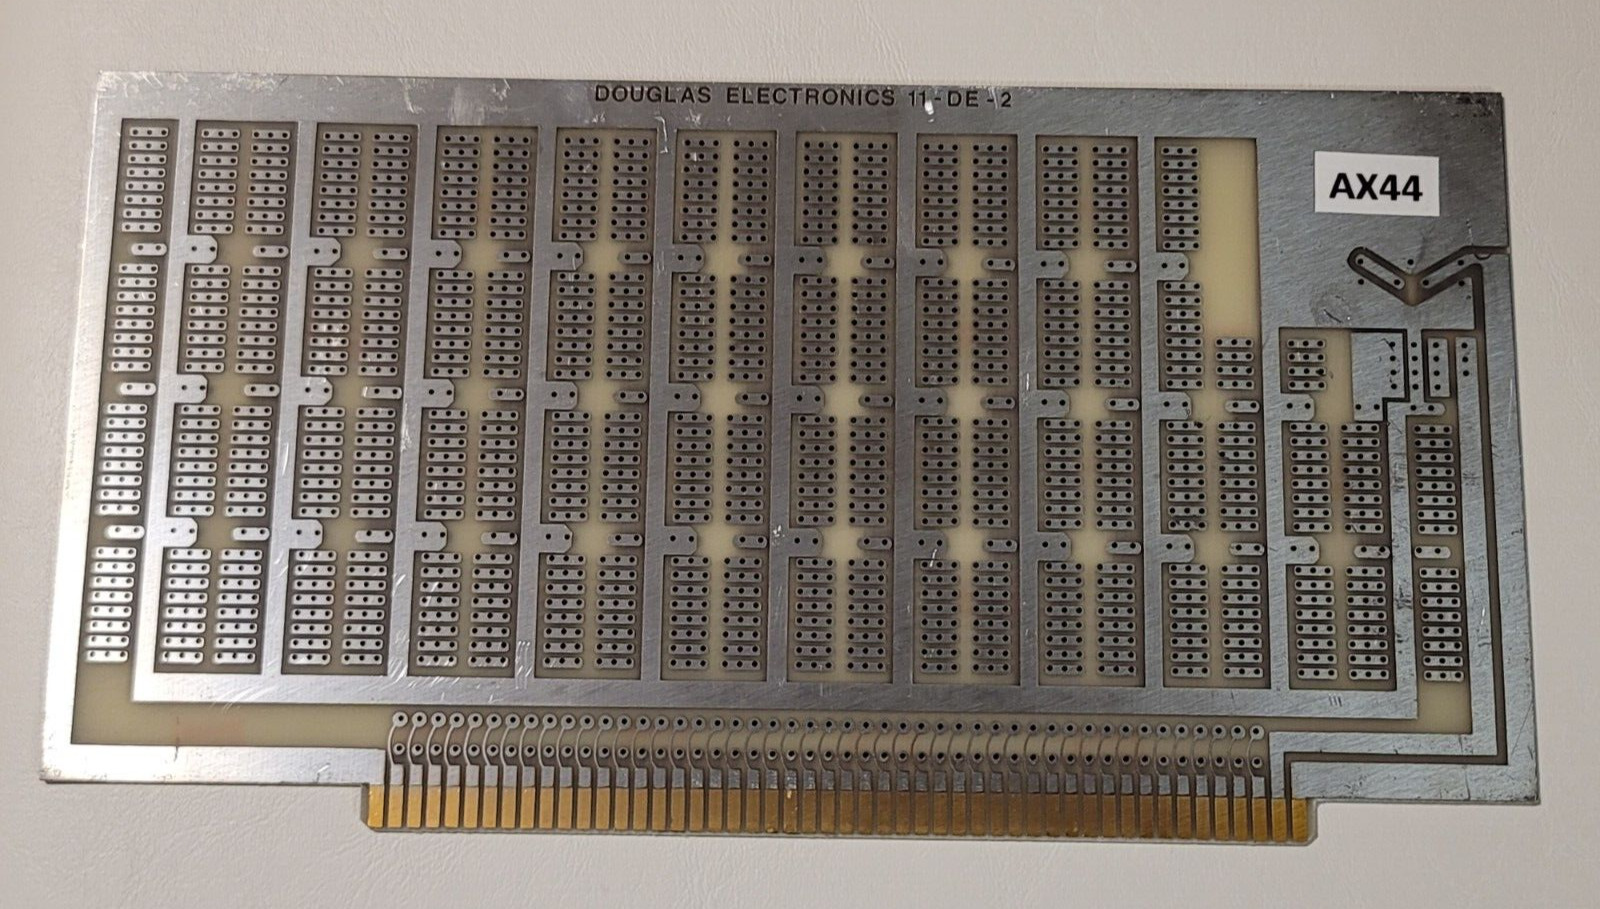 Altair MSAI   Douglas Electronics 11 DE Prototype Card S100 circuit board #AX44